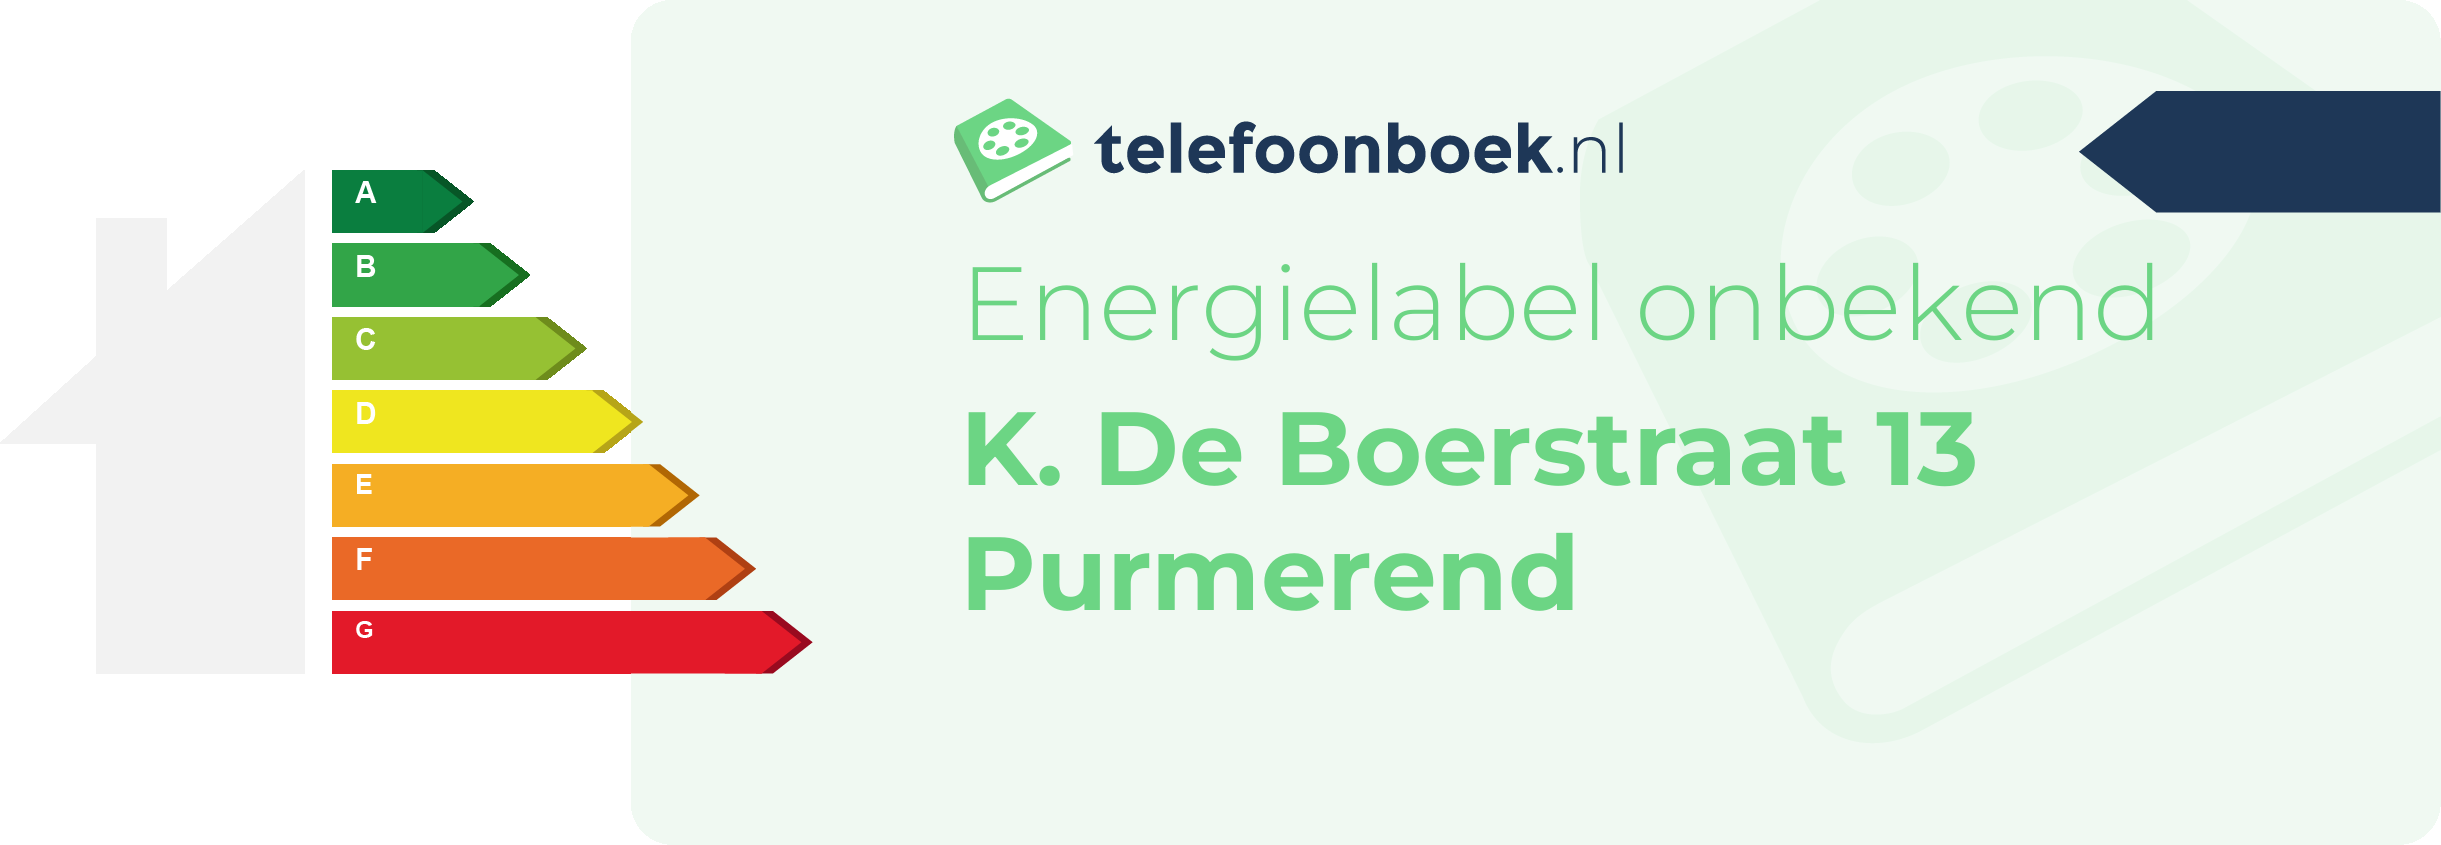 Energielabel K. De Boerstraat 13 Purmerend